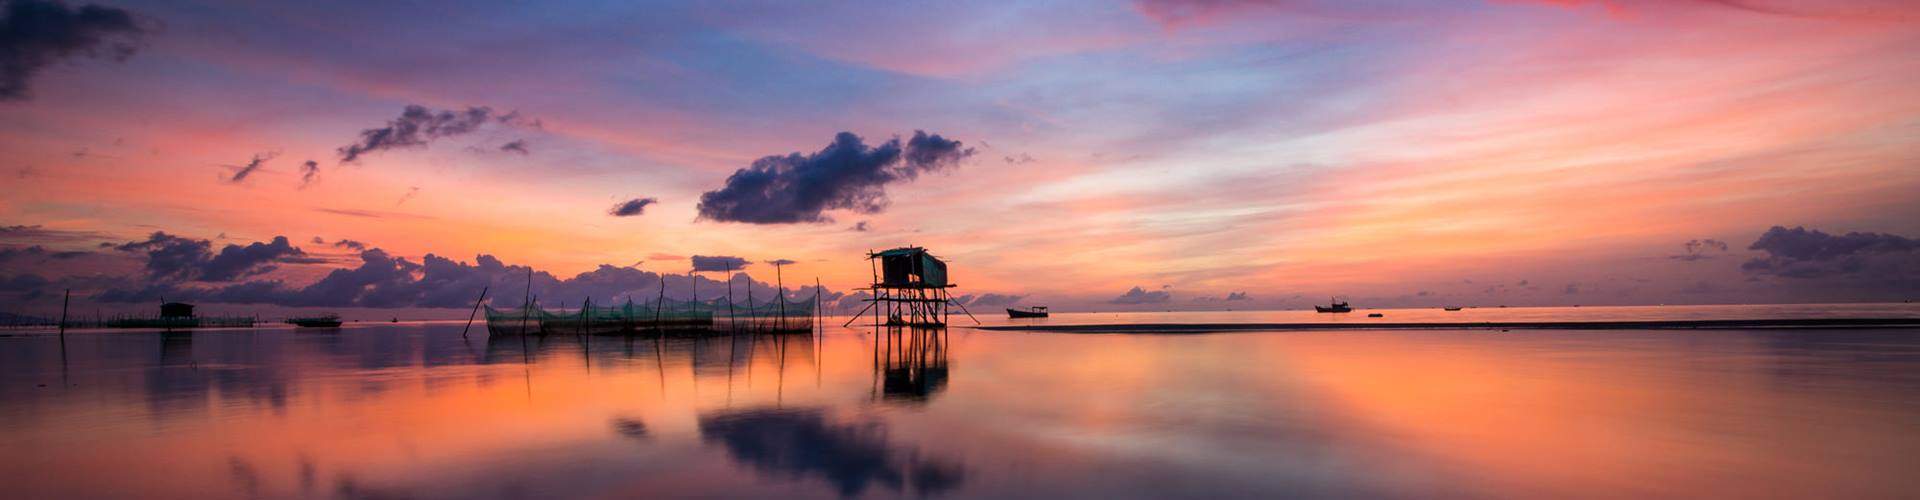 Phu quoc sunset vietnam